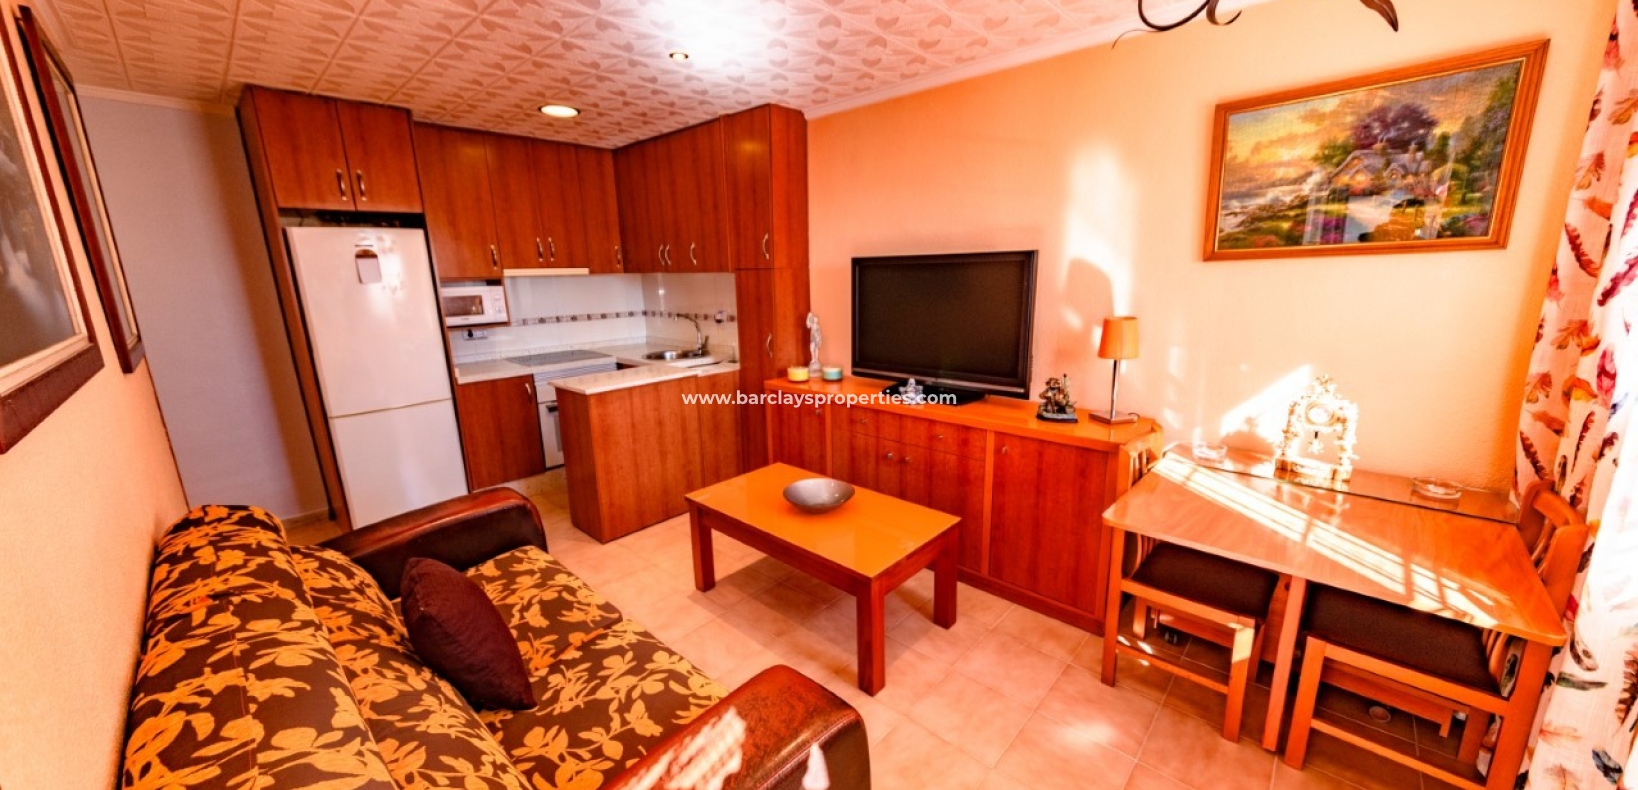 Living Room - Terraced Property for sale in Urbanisation La Marina